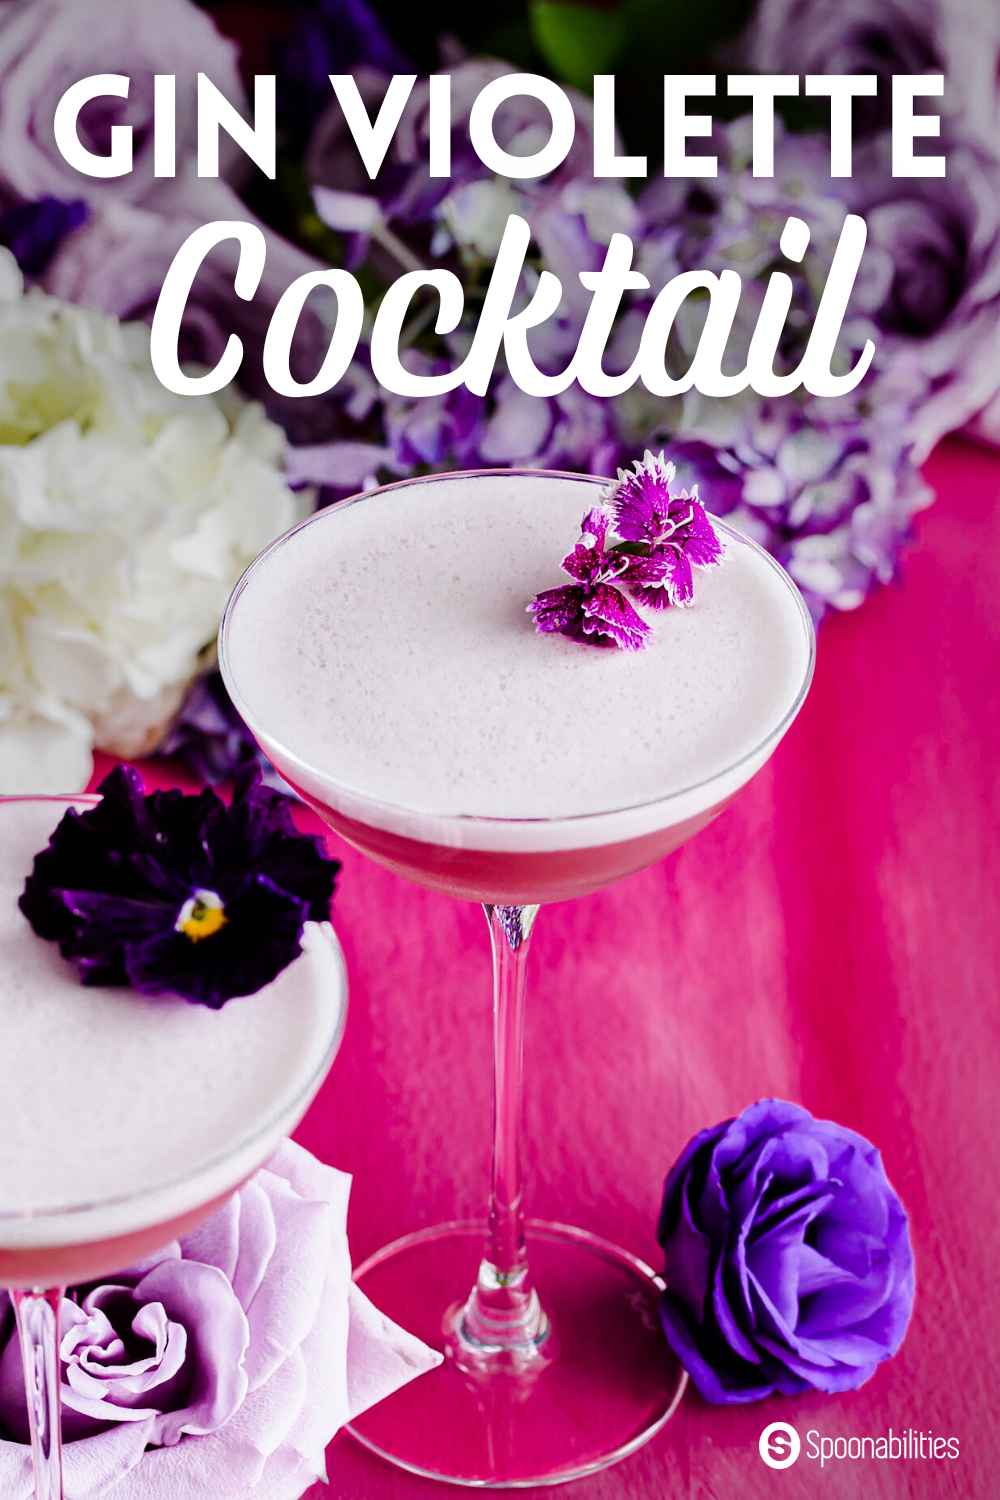 Gin violette cocktail with violet colored flower garnish